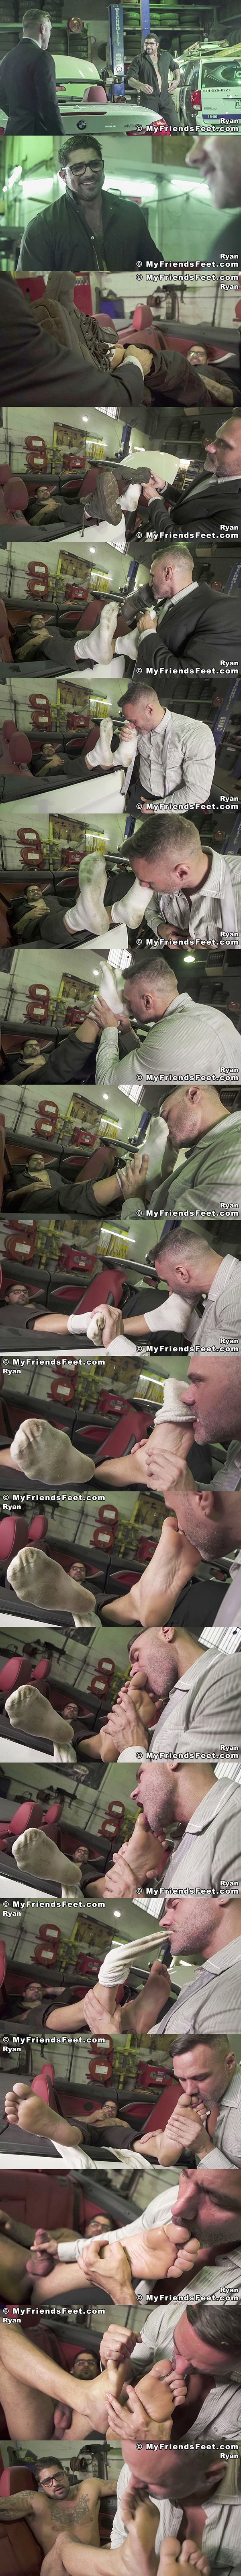 Myfriendsfeet - masculine Candian straight stud, mechanic Ryan Bones gets his socks and bare feet worshiped by Manuel Skye before Ryan blows his white jizz 02